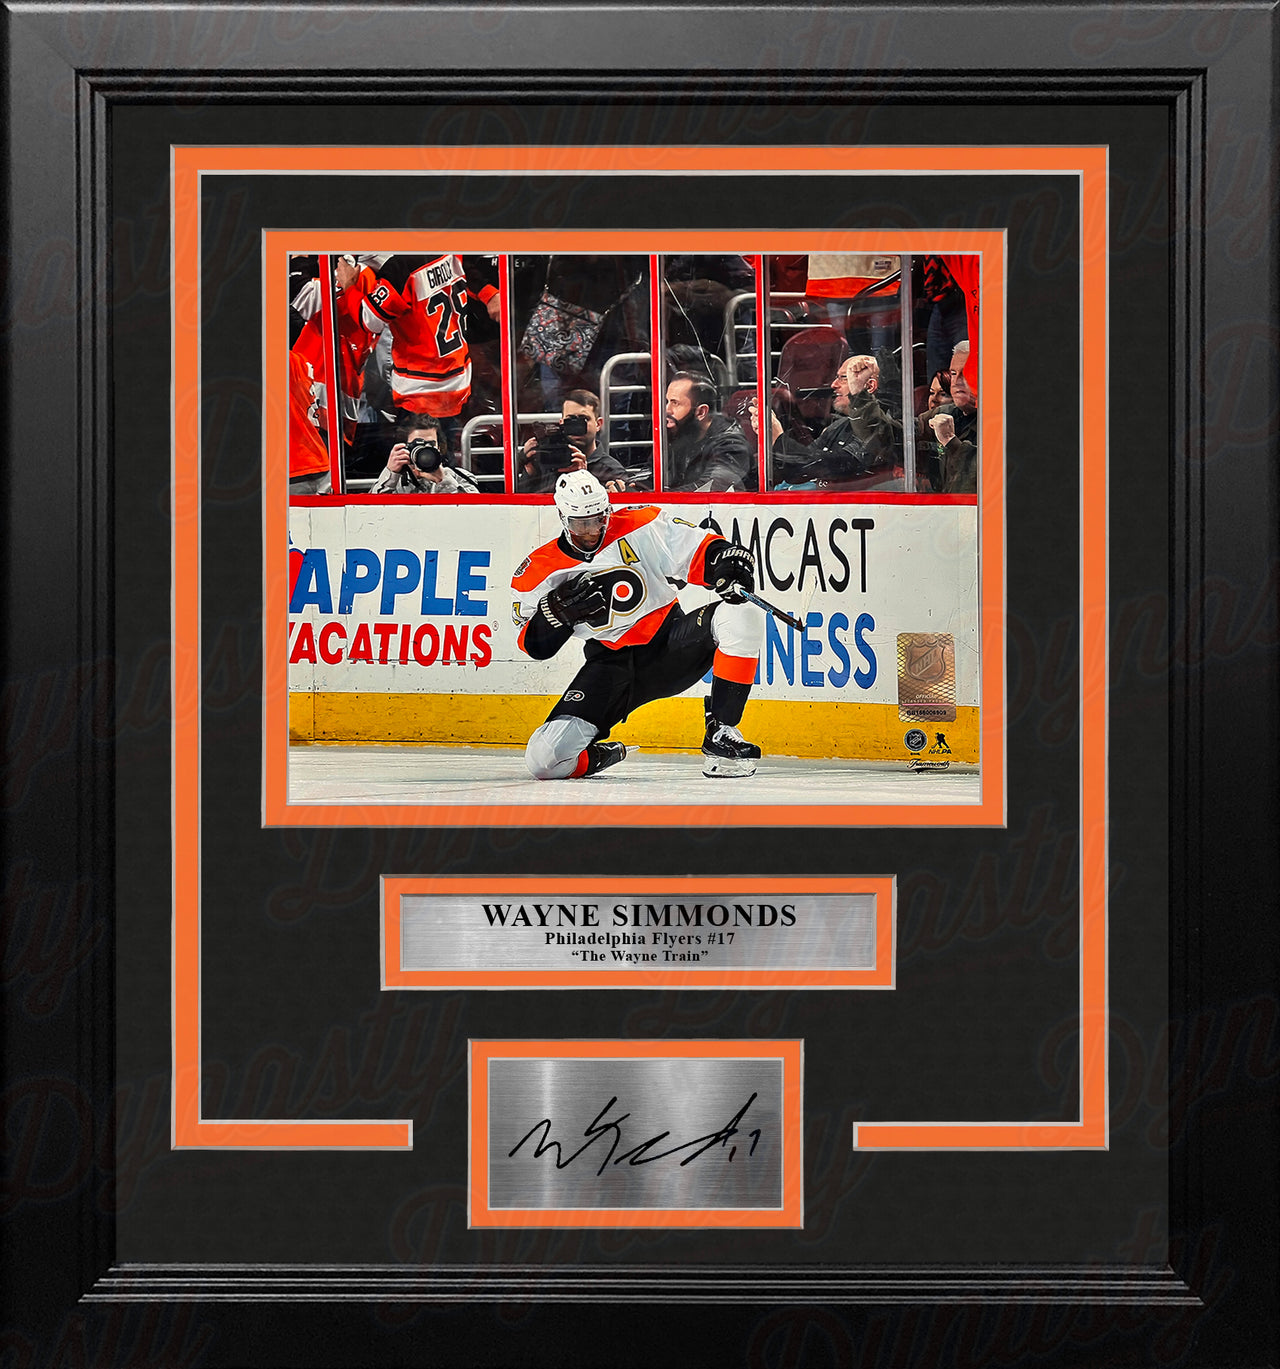 Wayne Simmonds Fist Pump Philadelphia Flyers 8" x 10" Framed Hockey Photo with Engraved Autograph